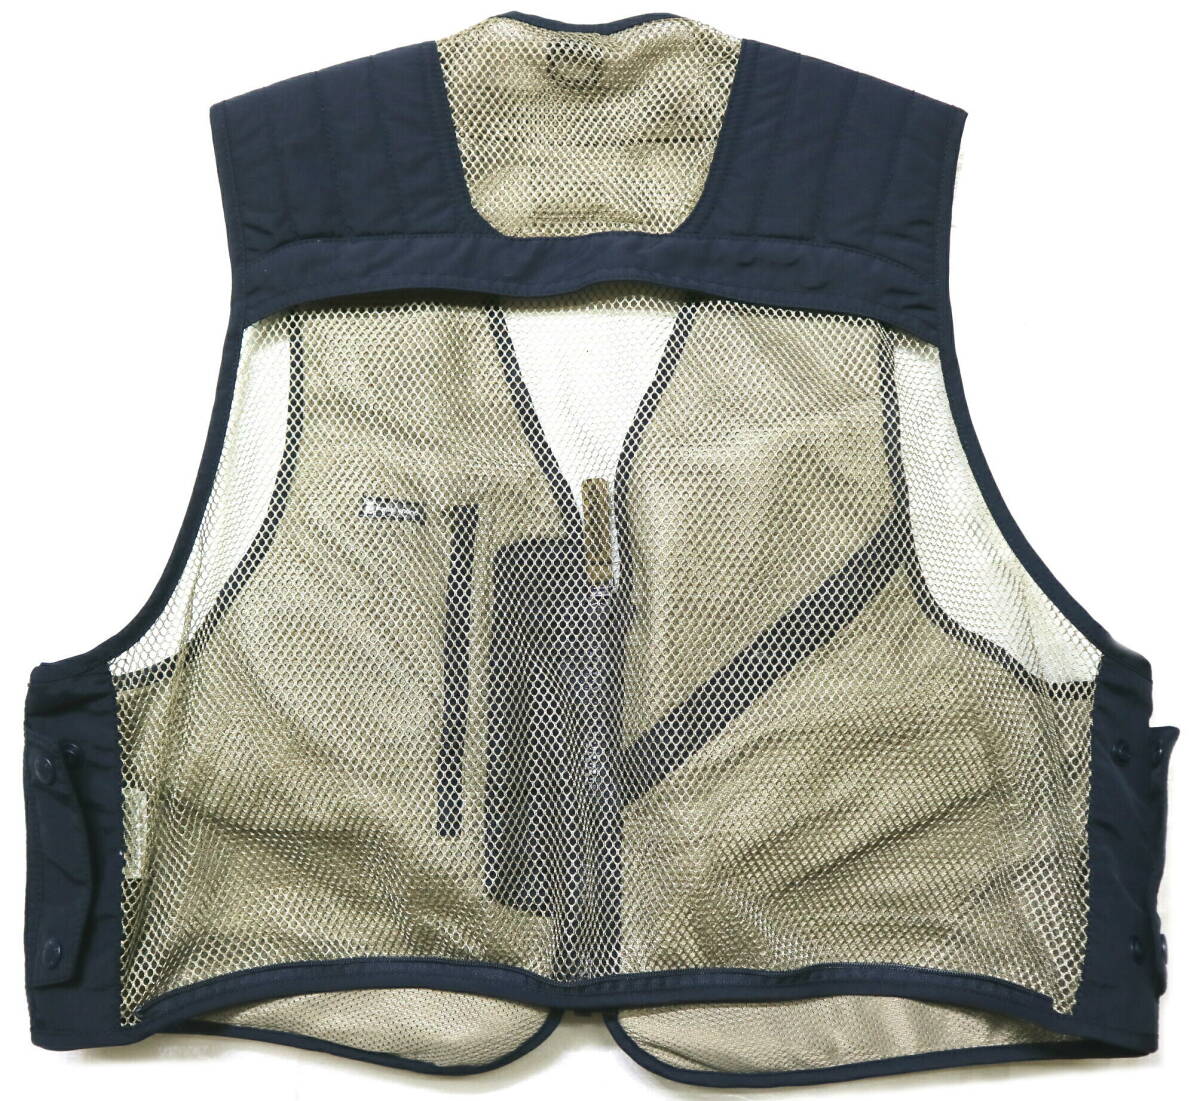  considerably excellent /2WAY!*SHIMANO Shimano VE-032C hyper liperu2WAY fishing vest *L size ( height 170-175 centimeter rank )